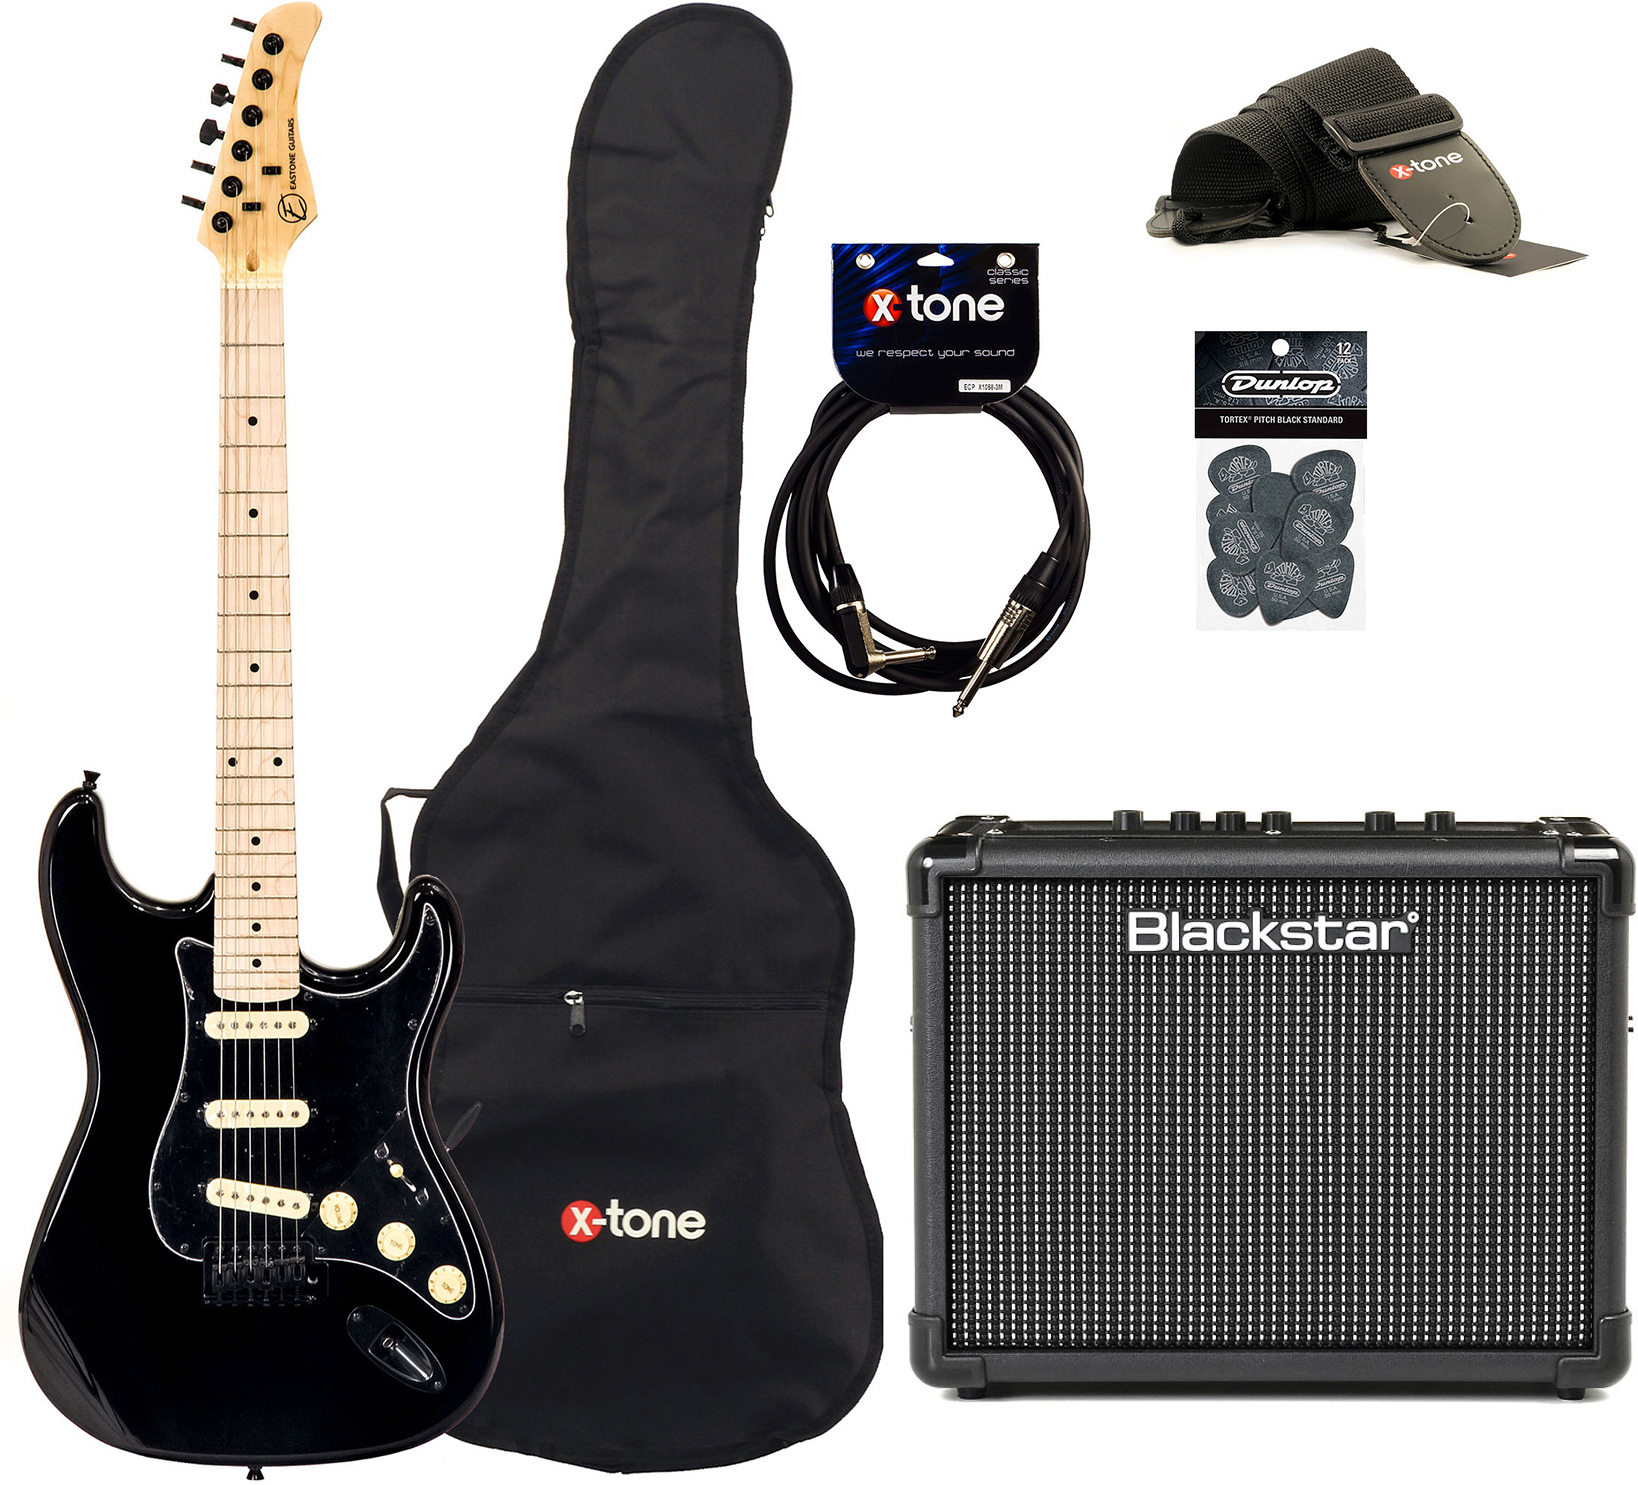 Eastone Str70 Gil +blackstar Id Core Stereo 10w V3 +cable +housse +courroie +mediators - Black - Electric guitar set - Main picture